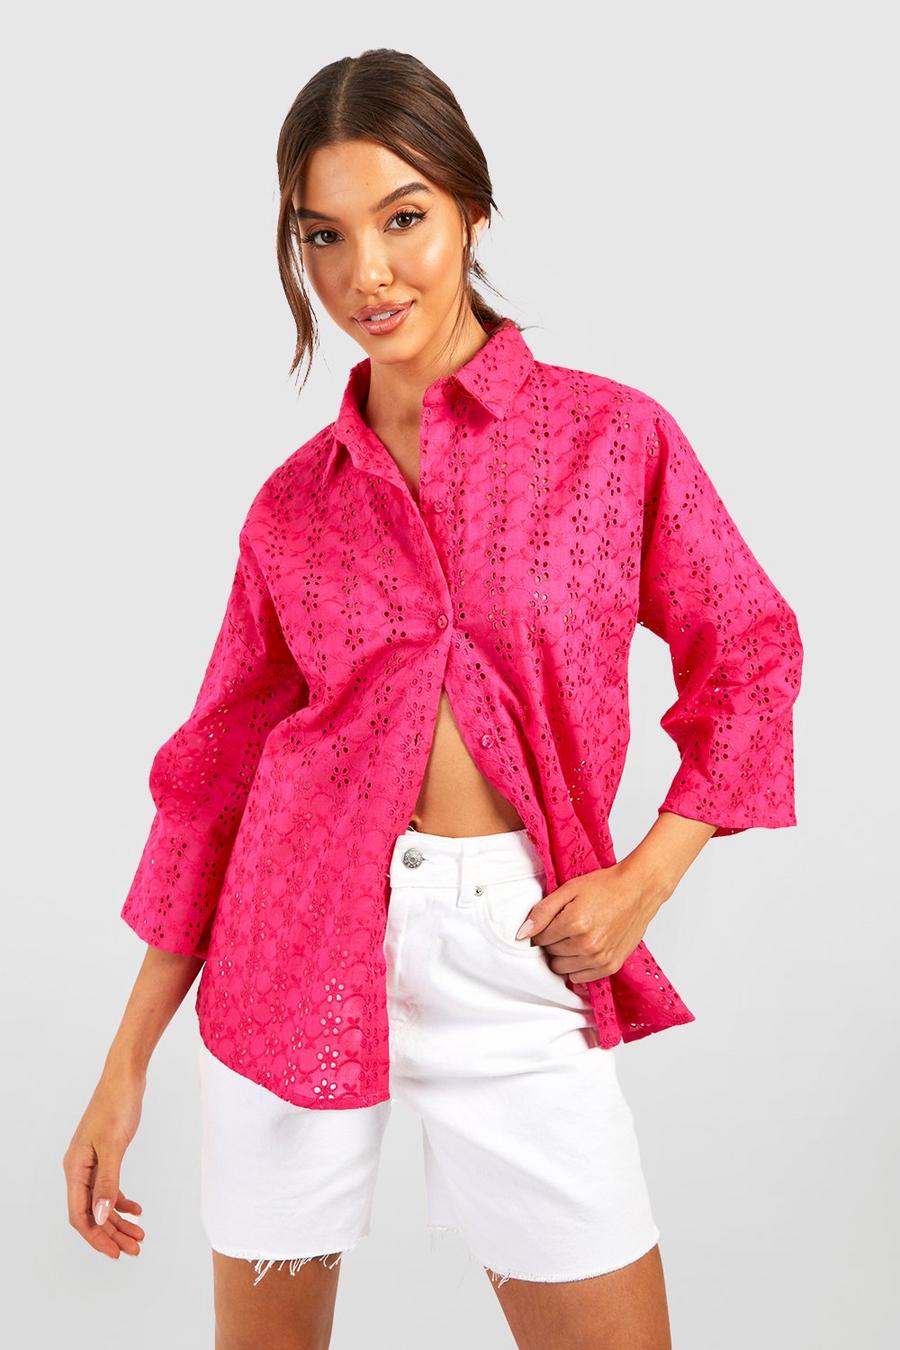 Lochmuster-Hemd mit Knopfleiste, Hot pink image number 1